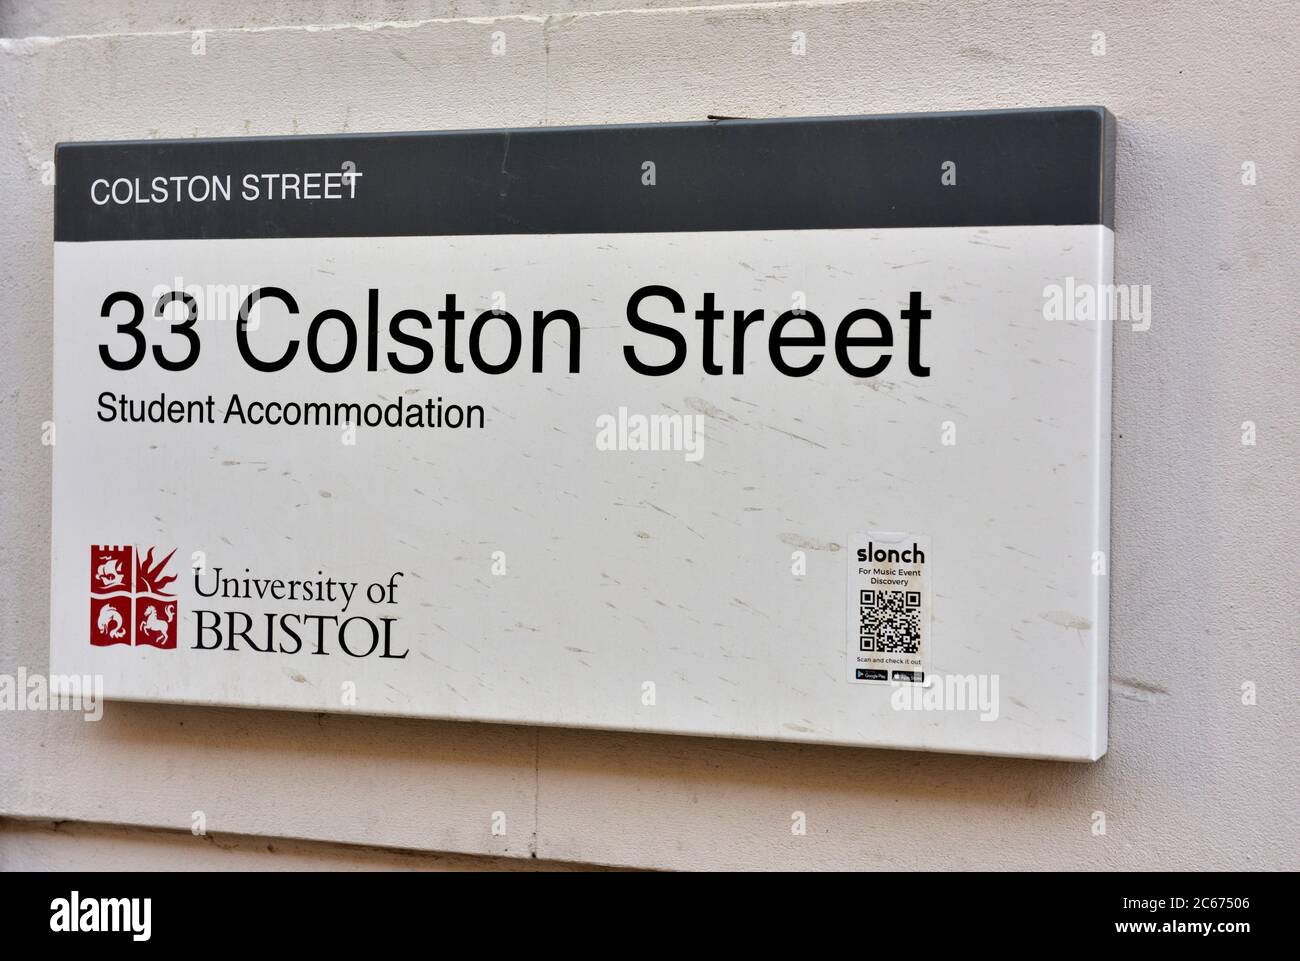 University of Bristol student accommodation building sign on 33 Colston Street, UK Stock Photo